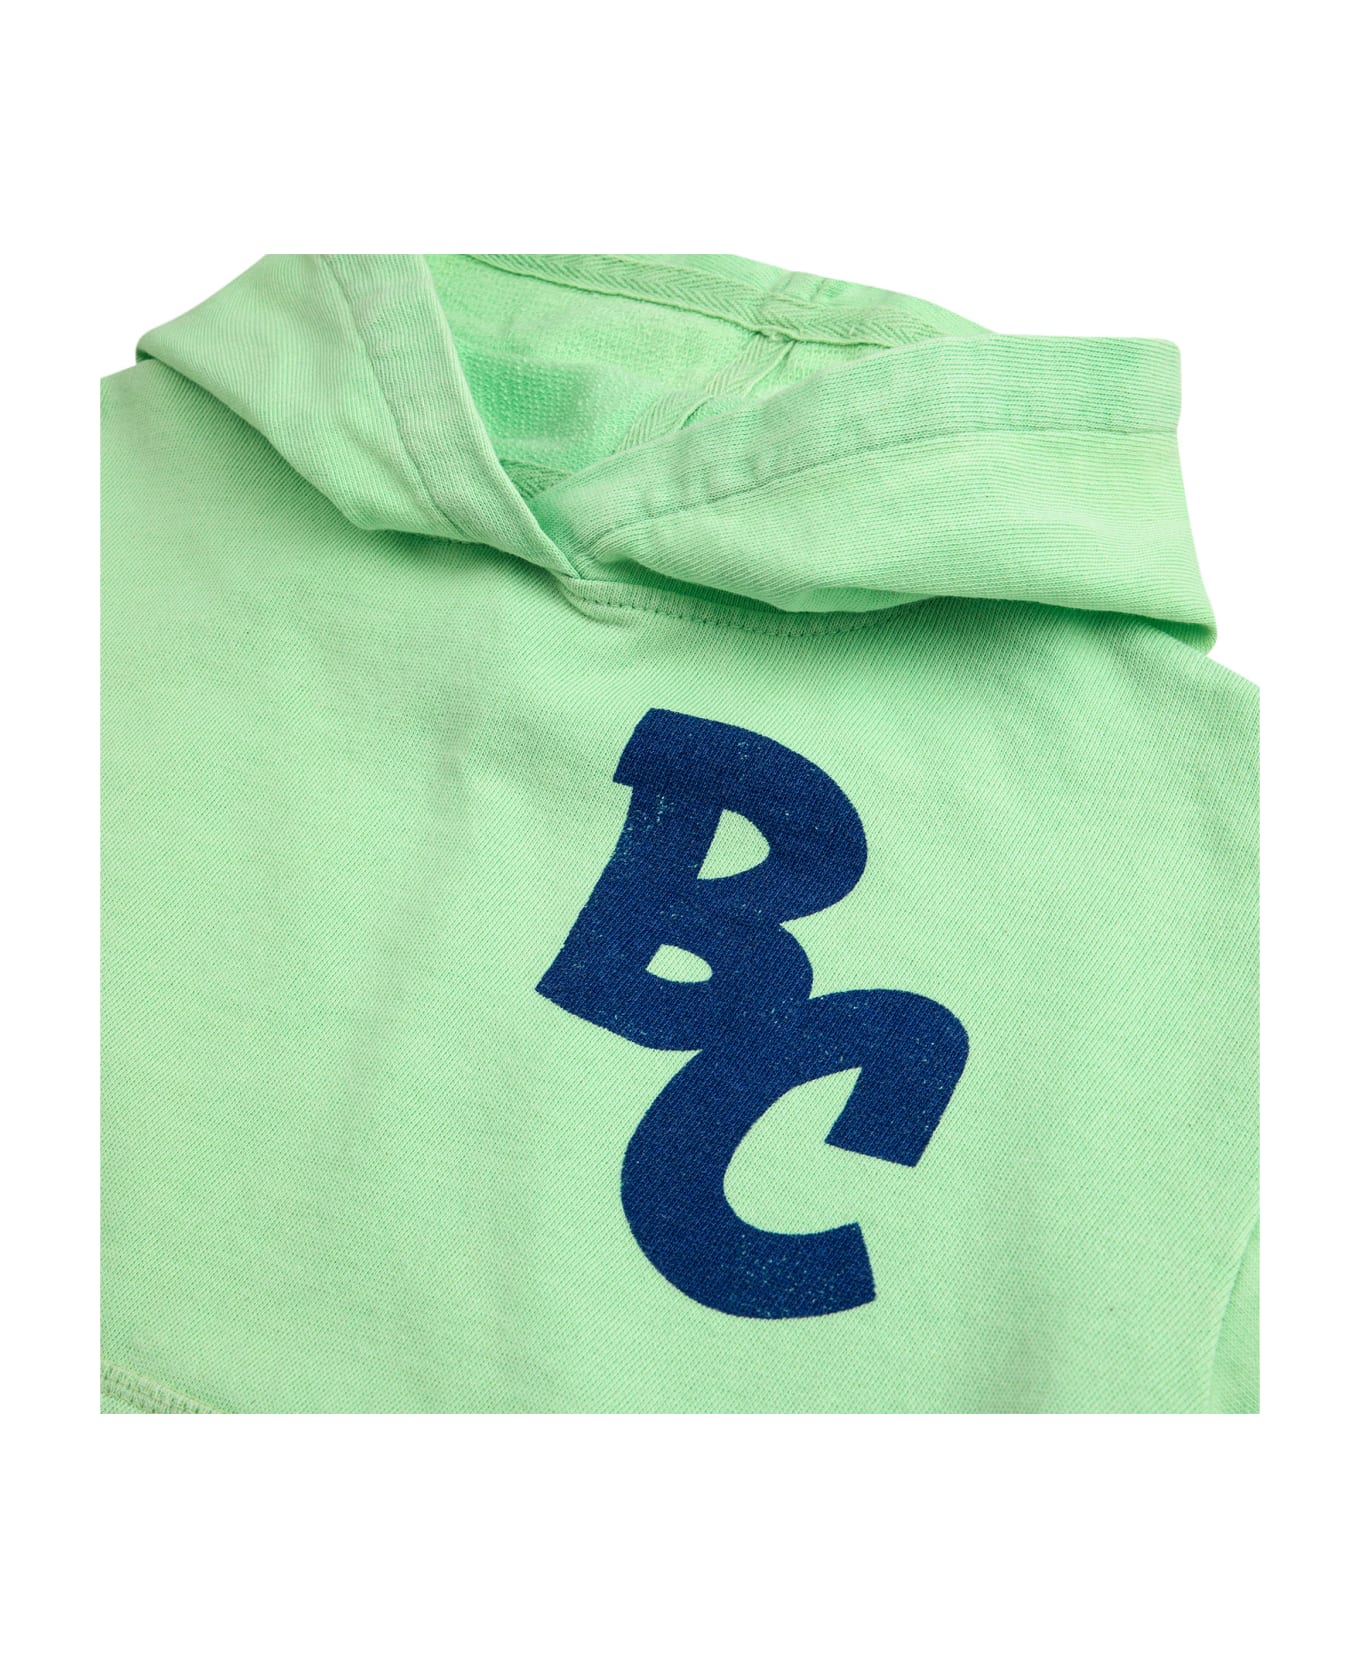 Bobo Choses Green Sweatshirt For Kids With Multicolor Logo - Green ニットウェア＆スウェットシャツ